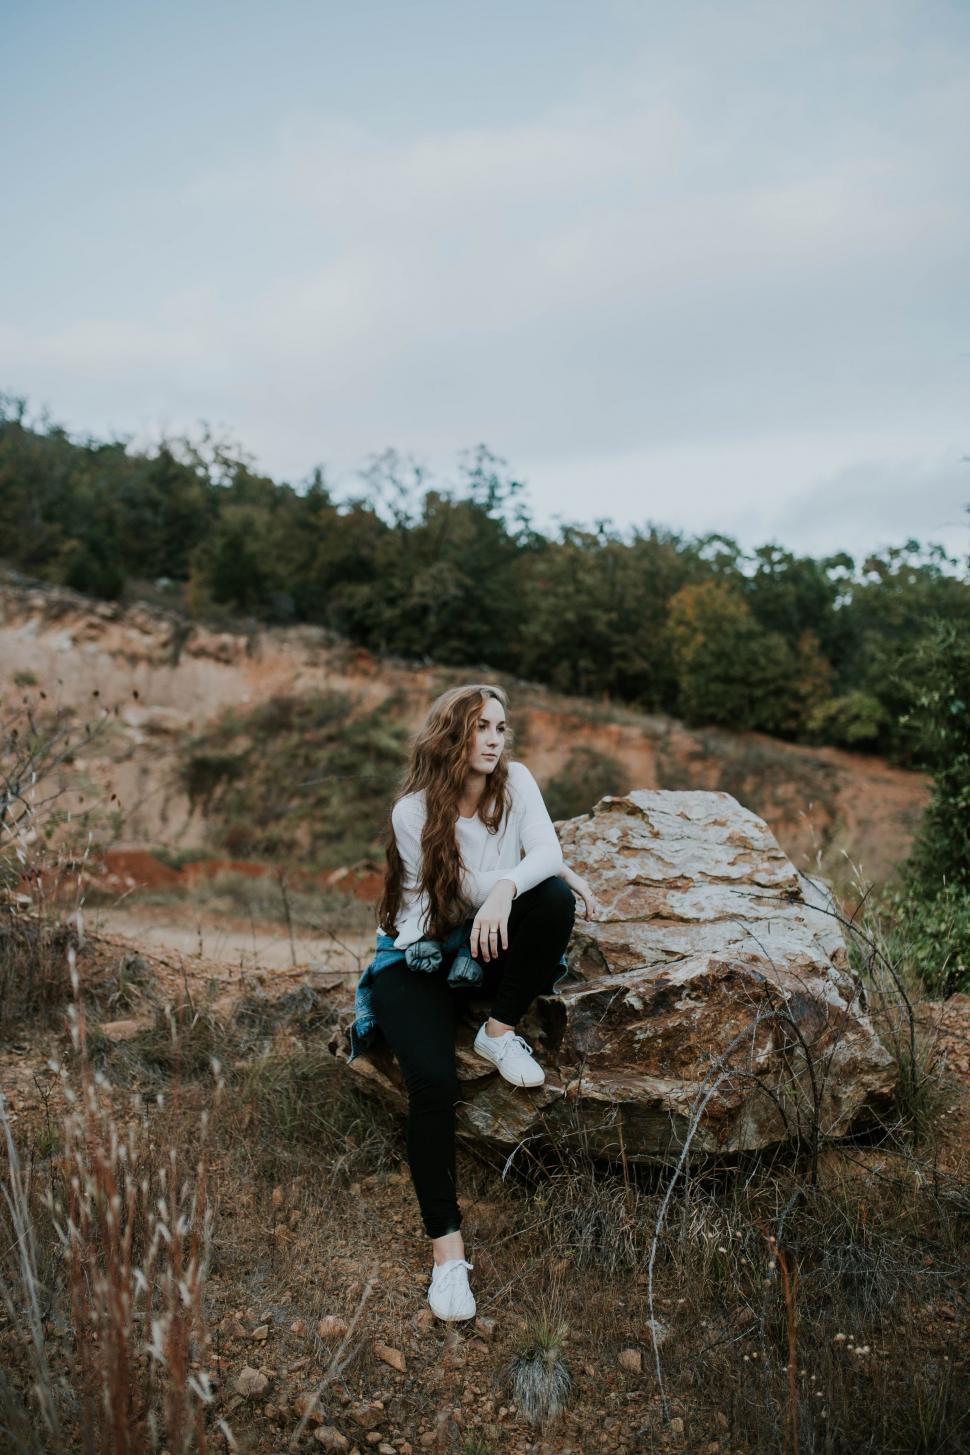 Free Image of Woman Sitting on Rock in Field 